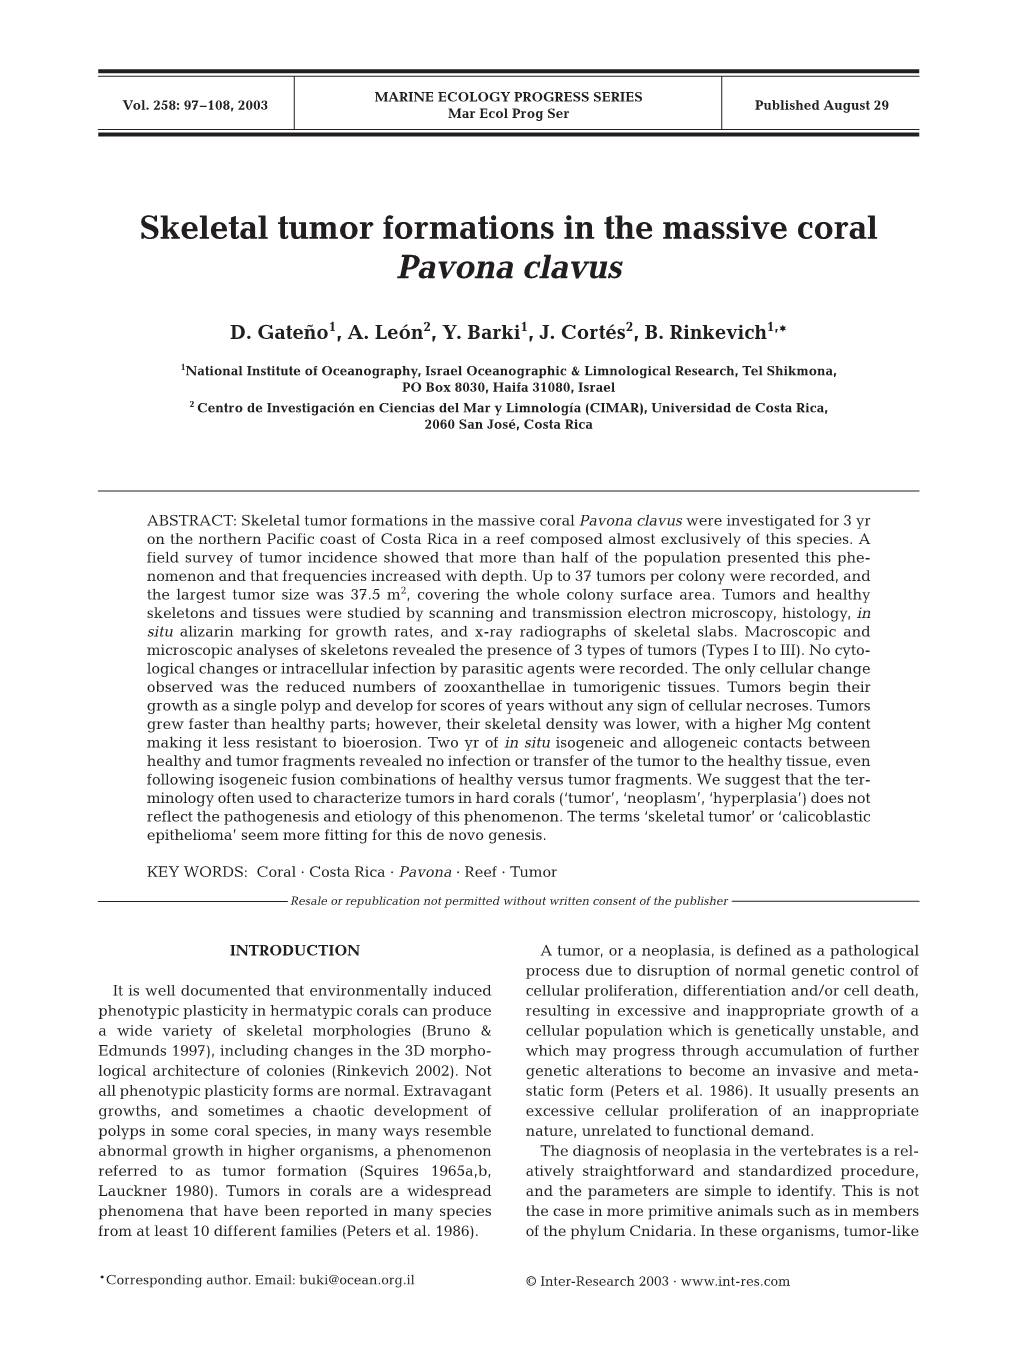 Skeletal Tumor Formations in the Massive Coral Pavona Clavus